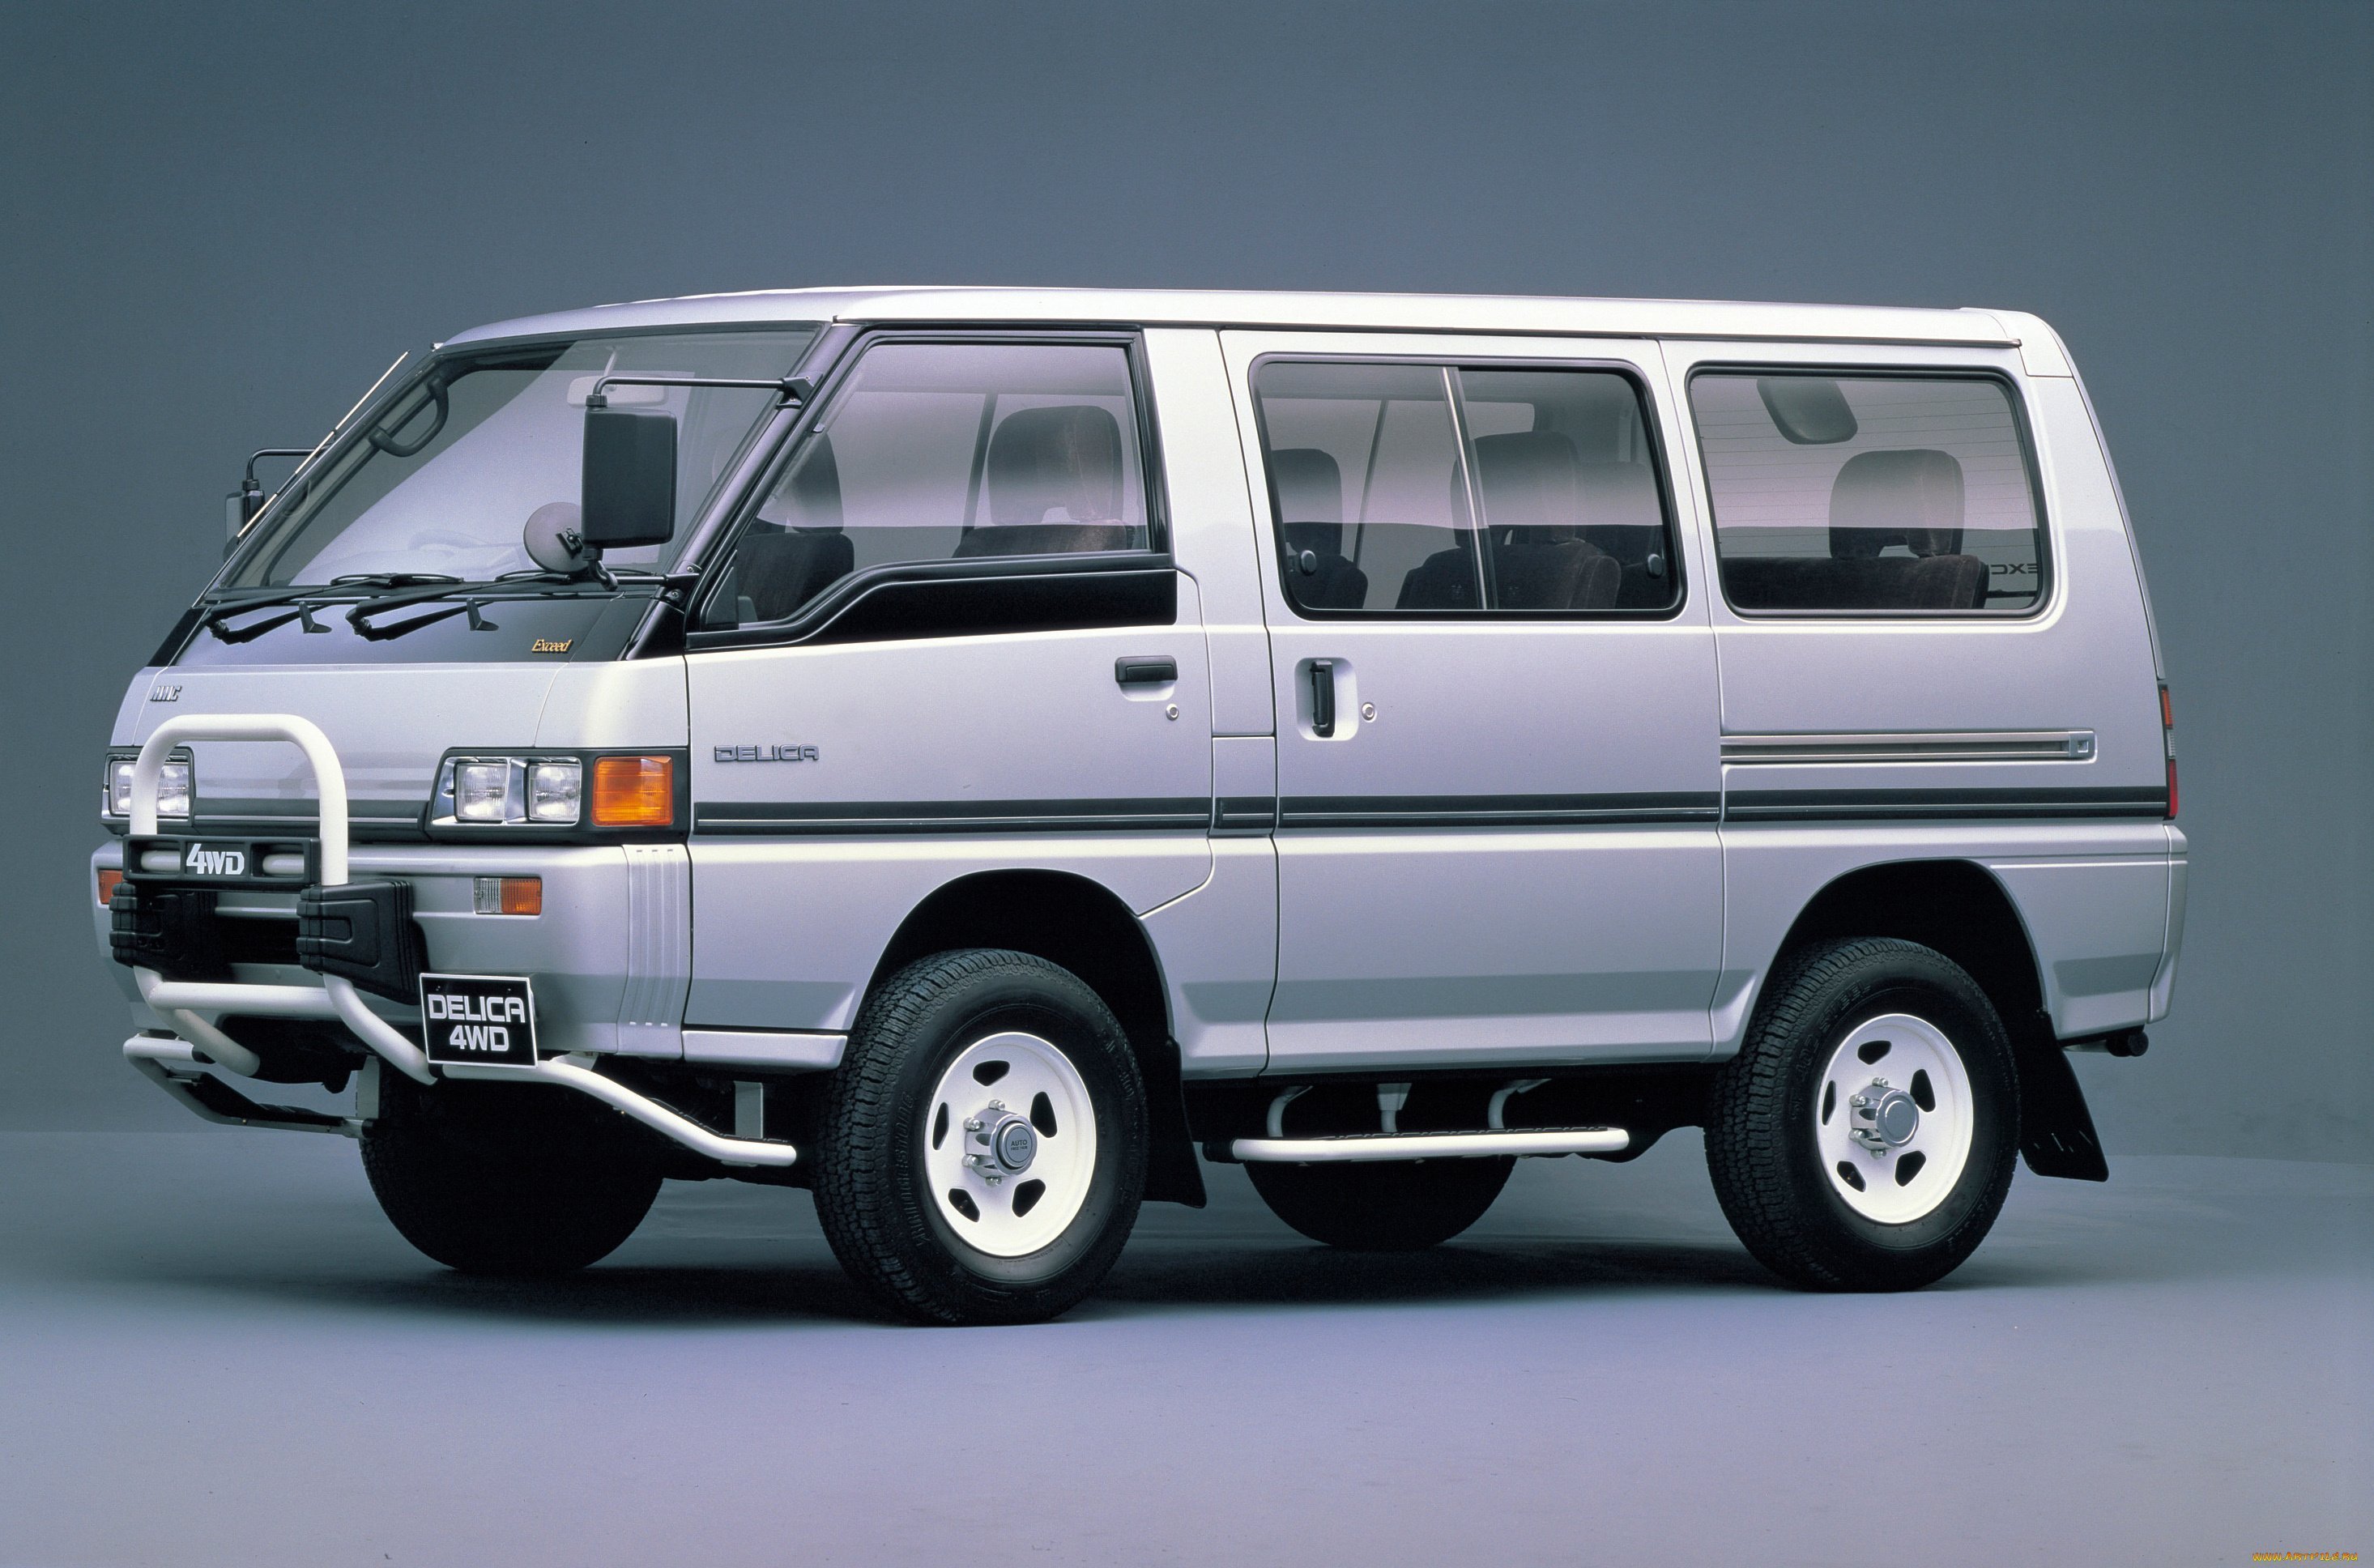 Купить японский микроавтобус. Mitsubishi Delica 4wd. Mitsubishi Delica 4. Mitsubishi Delica 4x4 2000. Mitsubishi Delica 200.